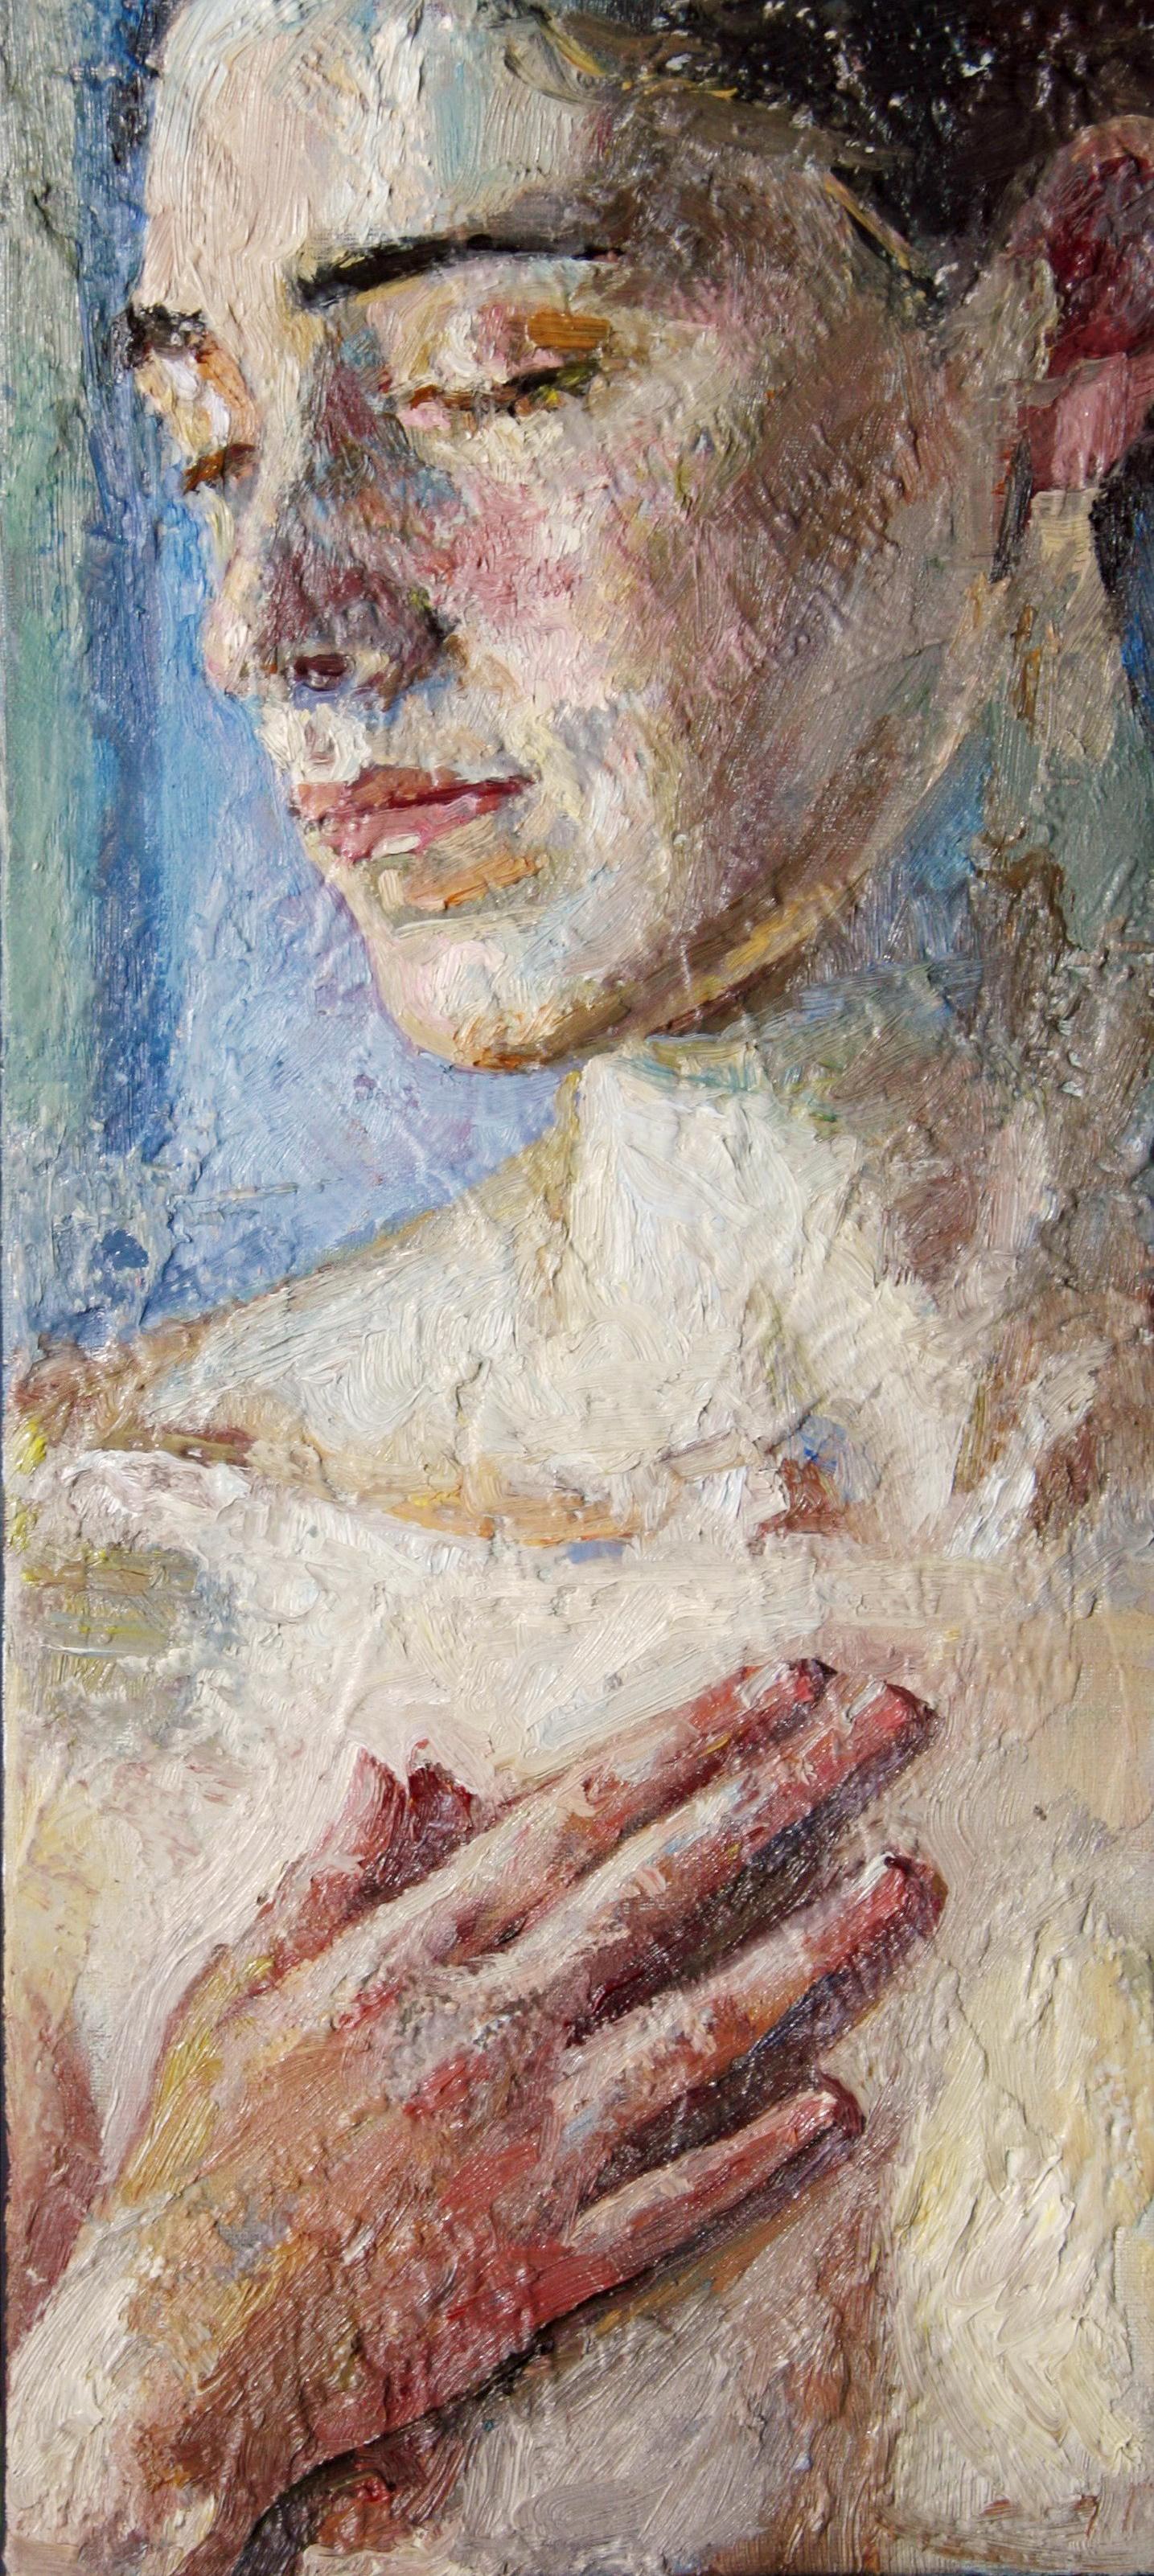 Montse Valdés Portrait Painting - 4-9-09 - 21st Century, Contemporary, Nude Painting, Oil on Canvas